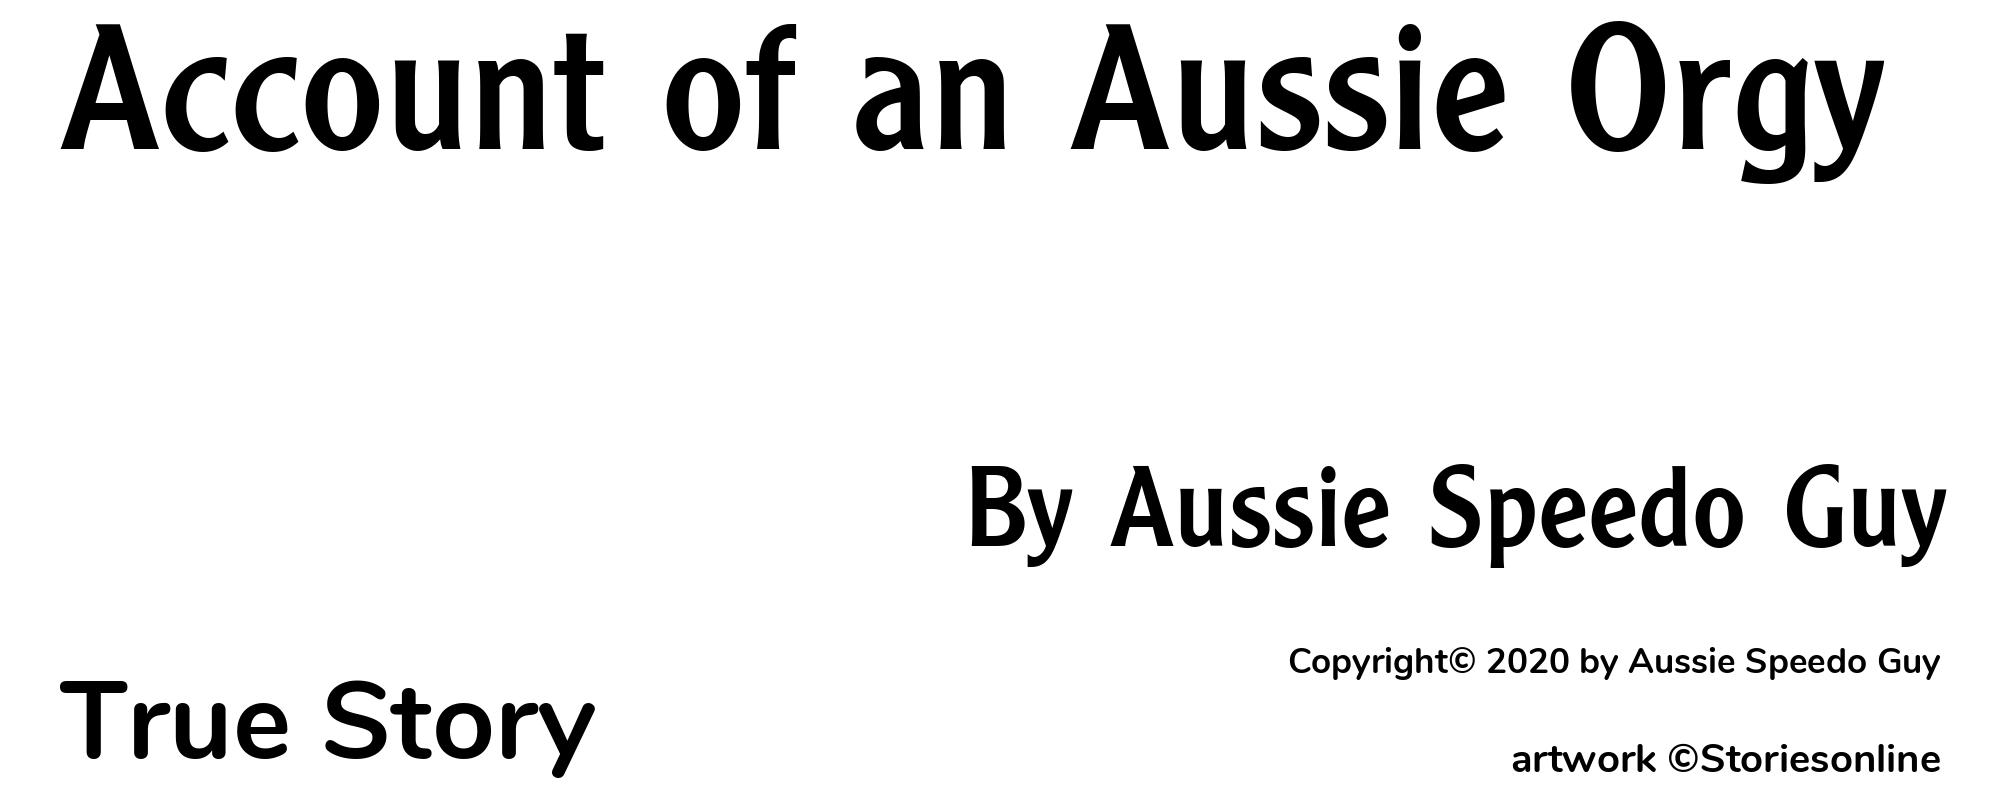 Account of an Aussie Orgy - Cover